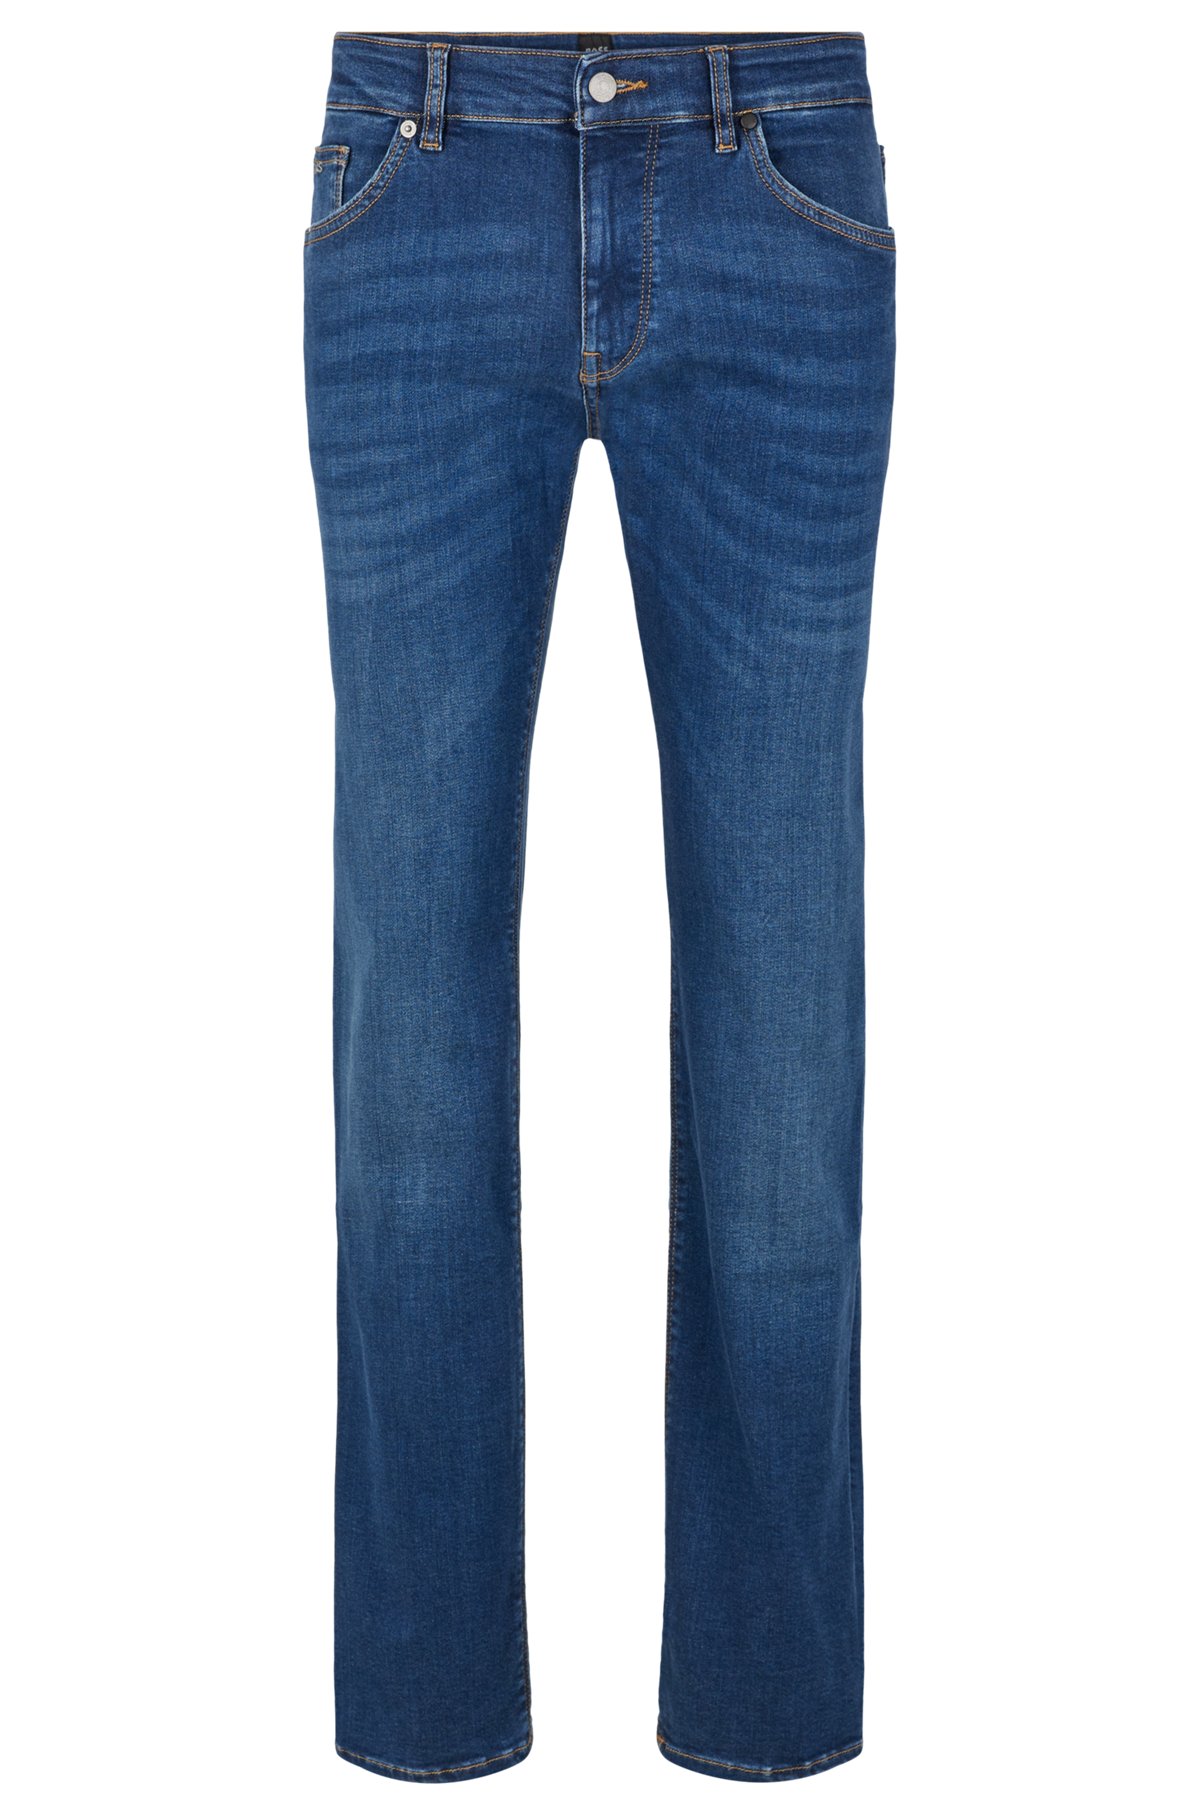 Regular-fit jeans in dark-blue cozy-stretch denim